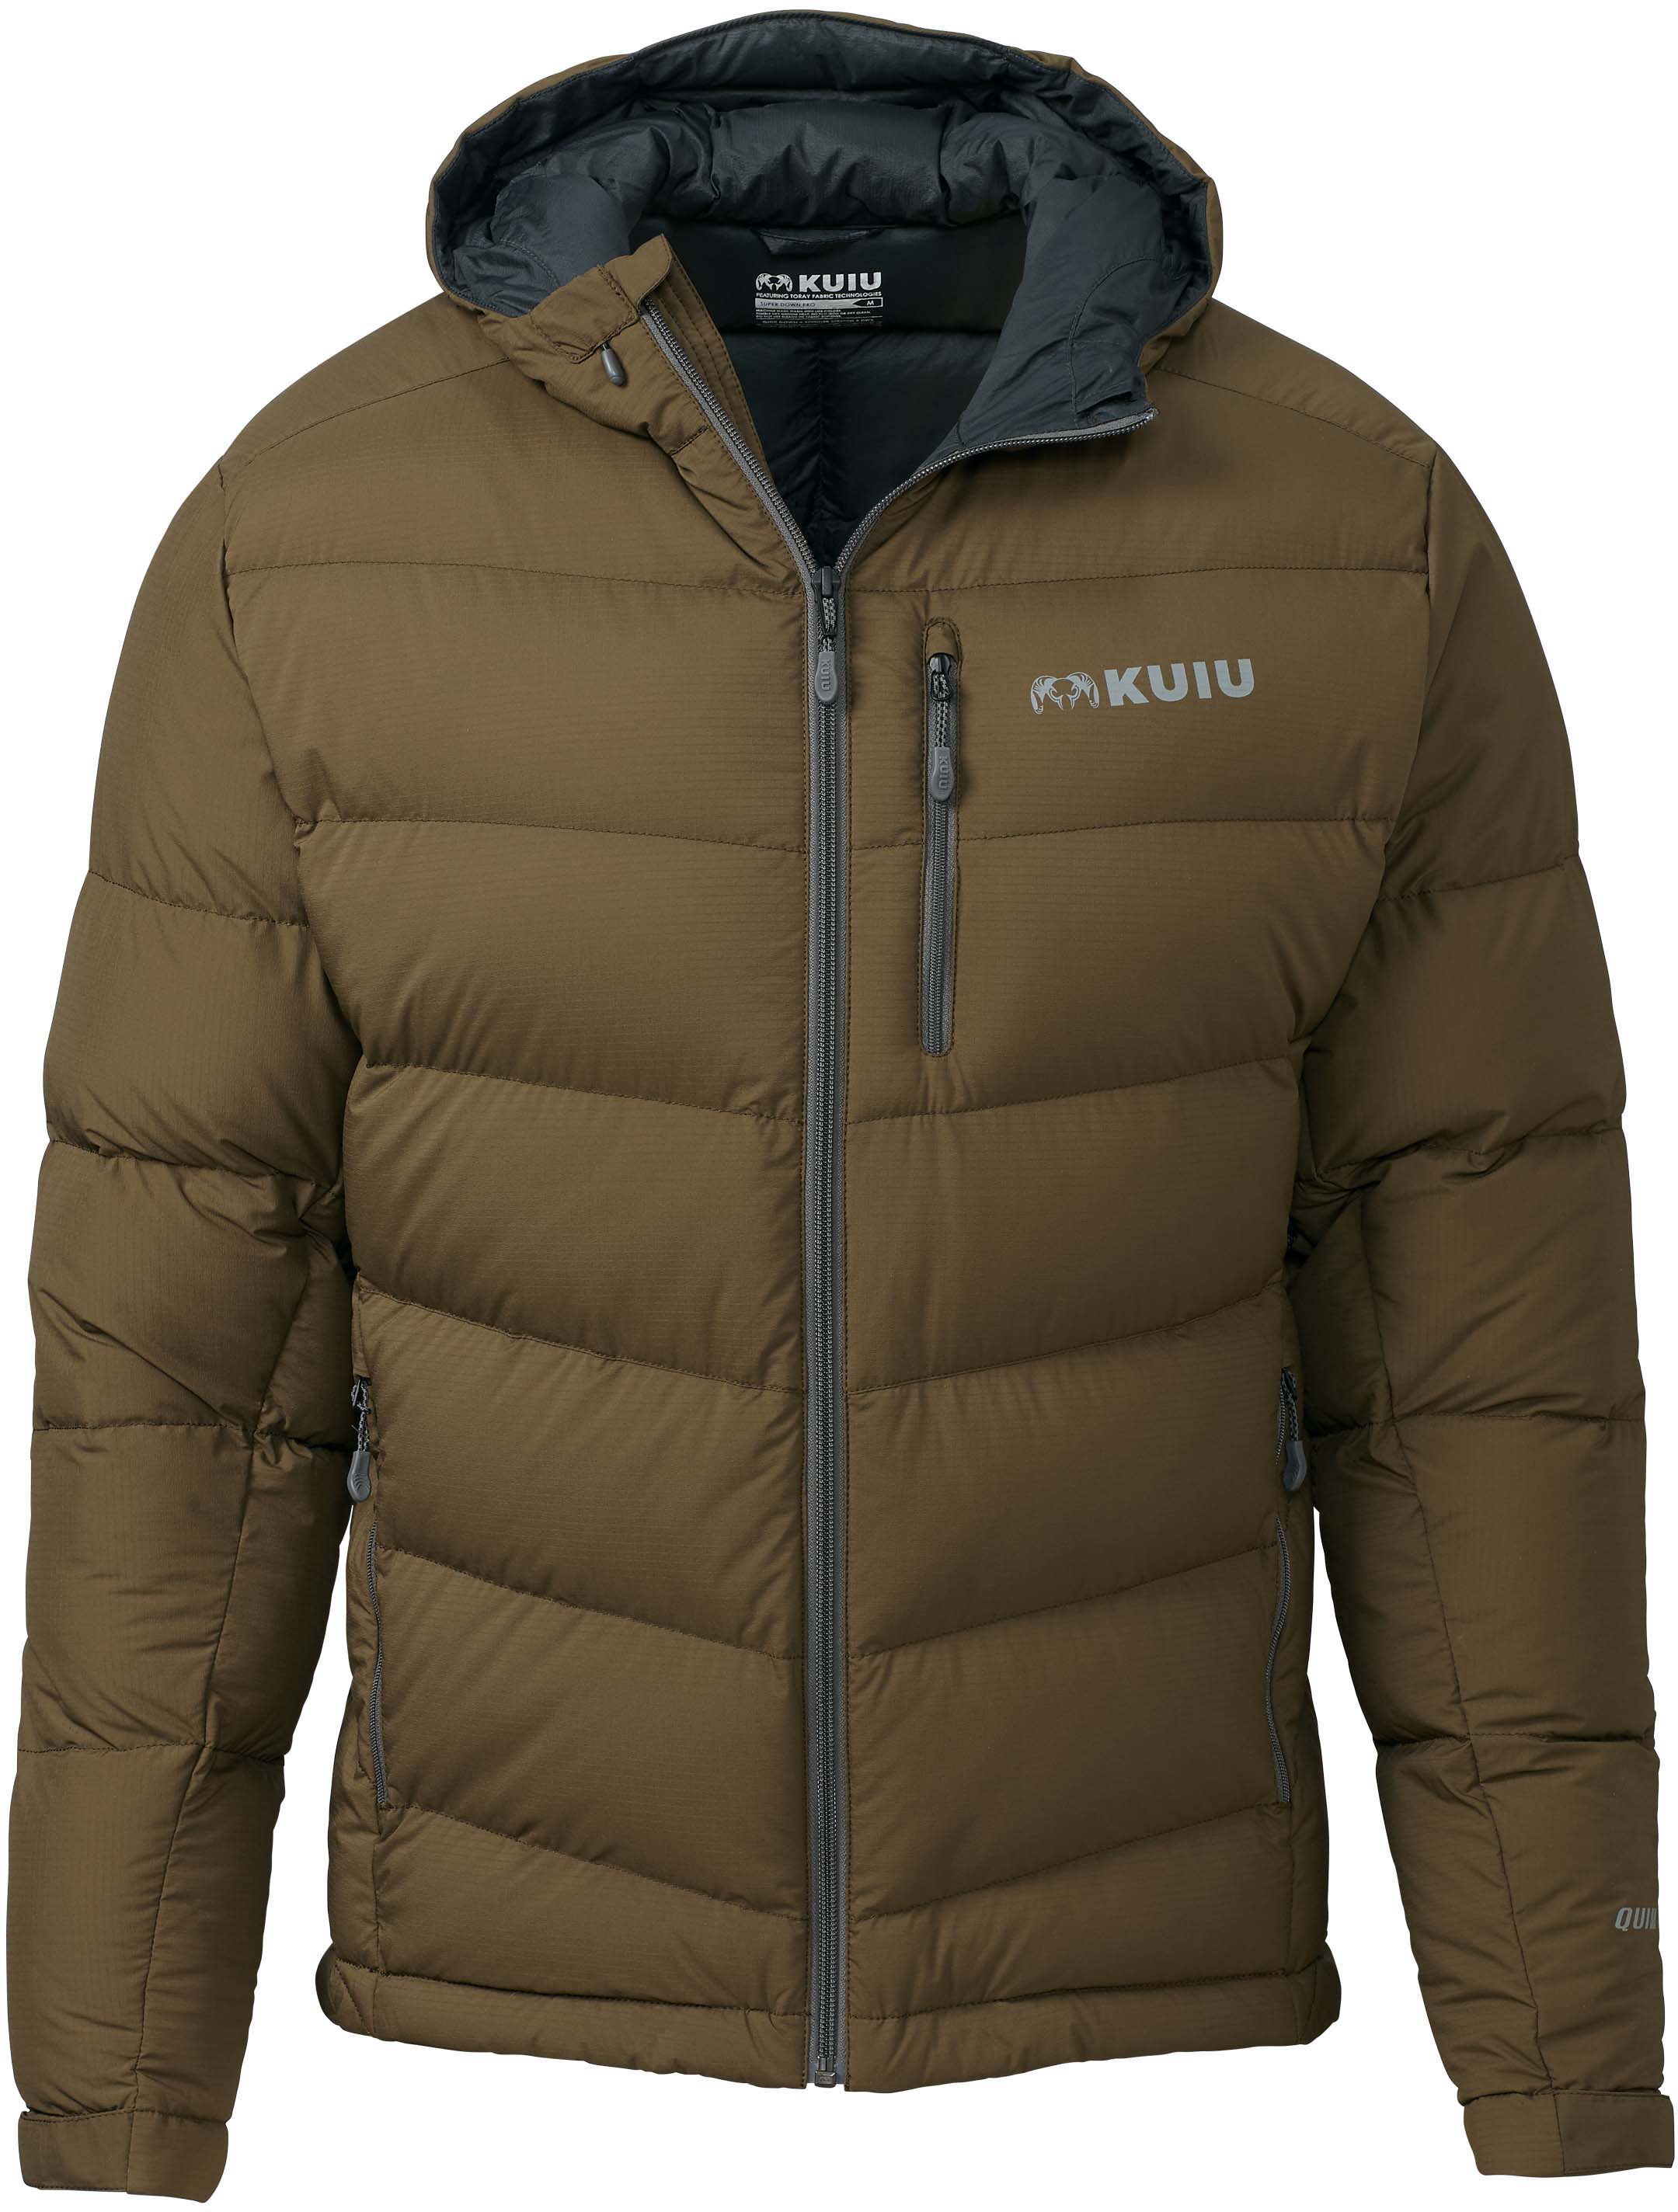 KUIU Wind Pro Fleece Full Zip Hunting Jacket in Valo | Size Small